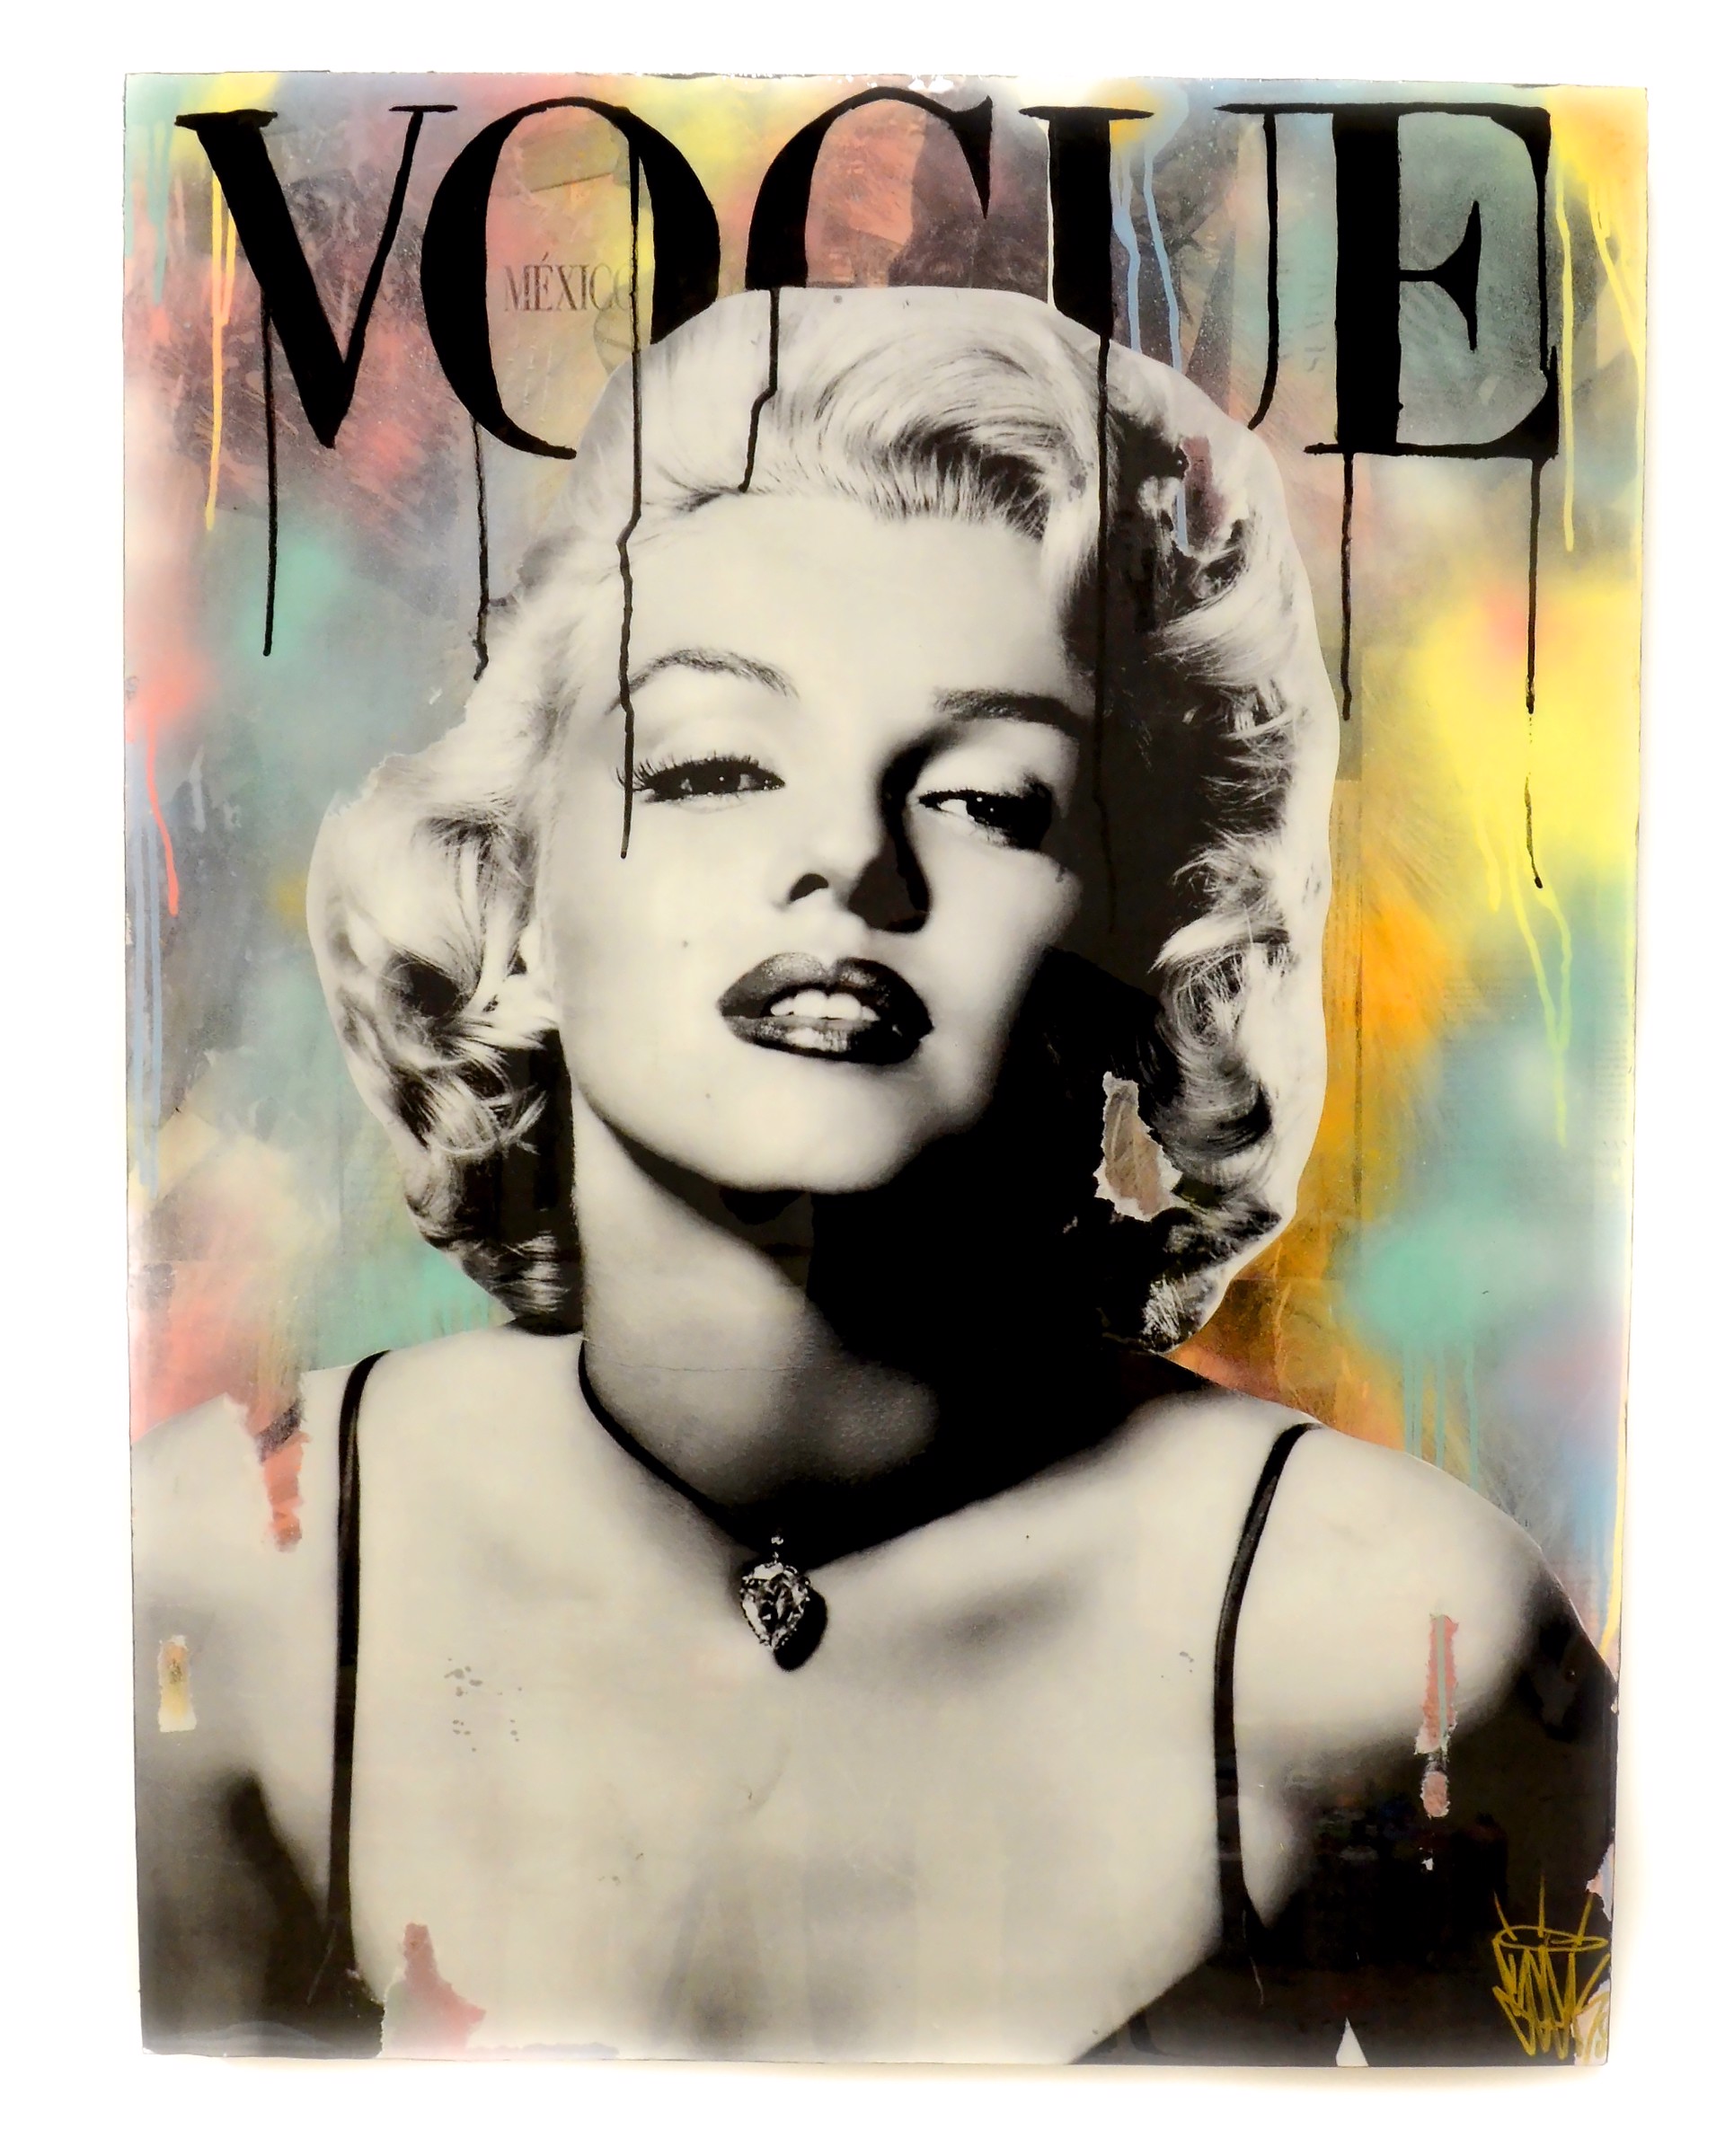 Monroe x Vogue by Seek One